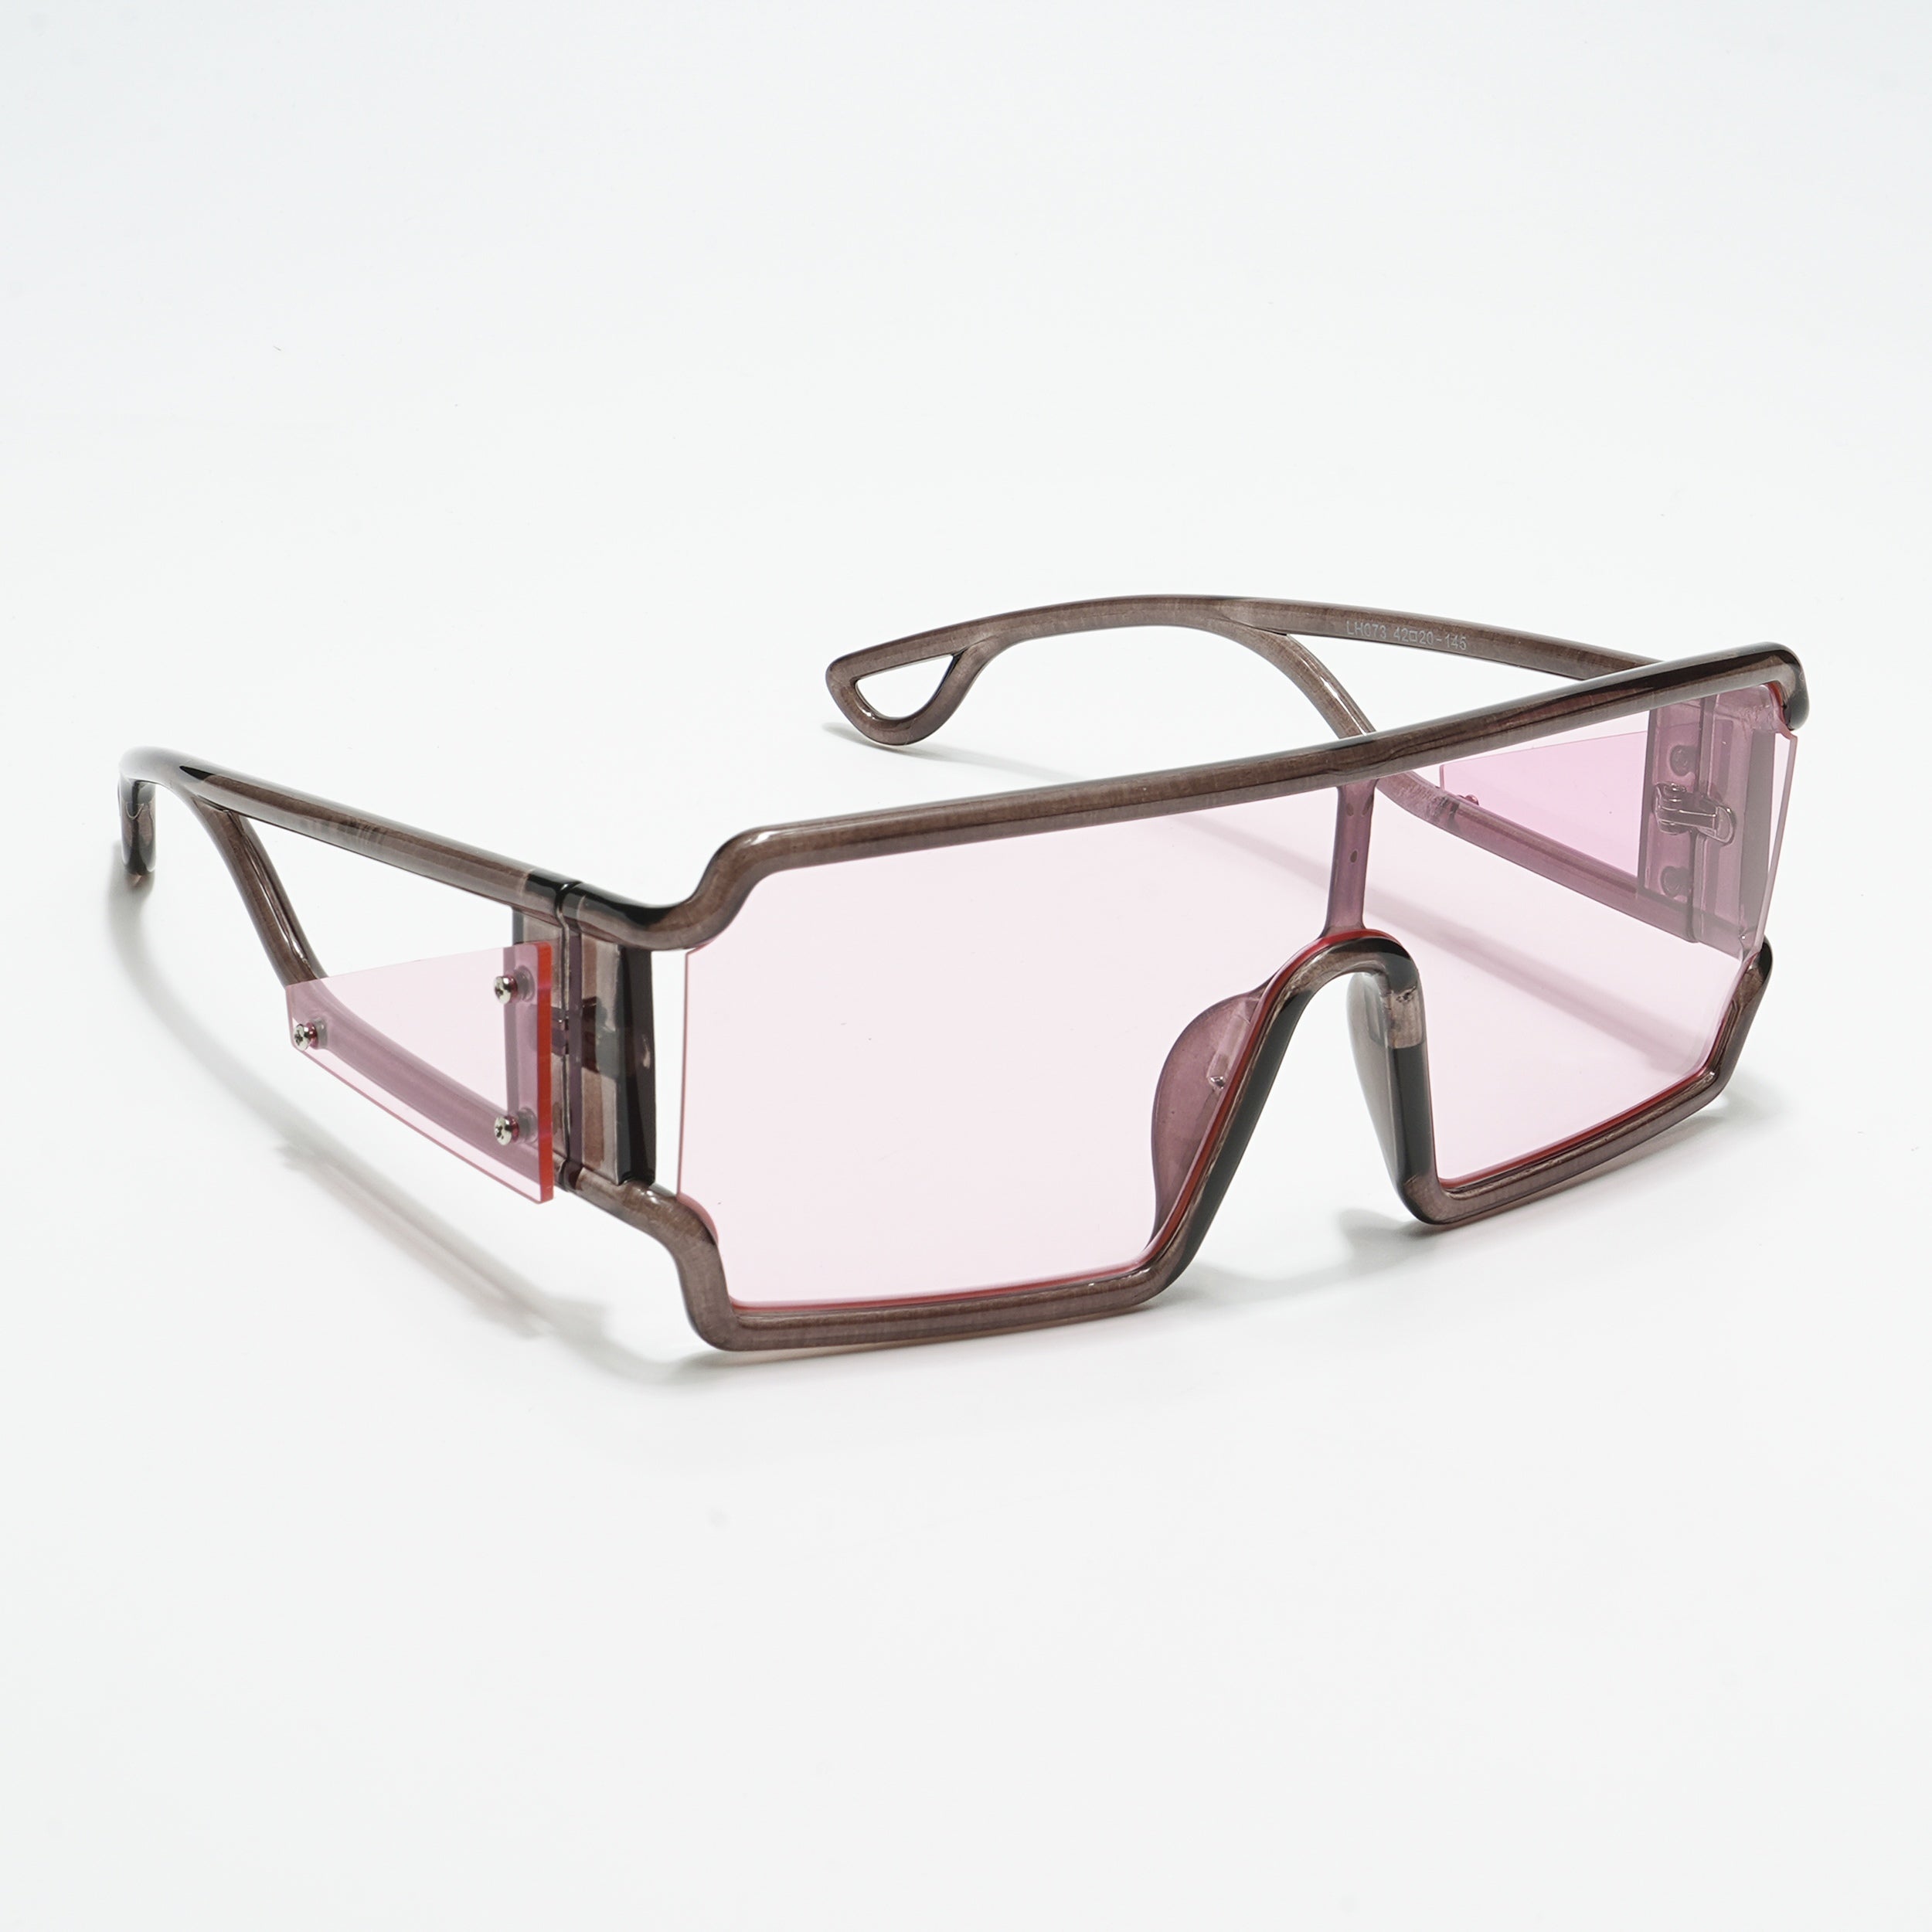 Voyage Brown Wayfarer Sunglasses for Men & Women - MG4560